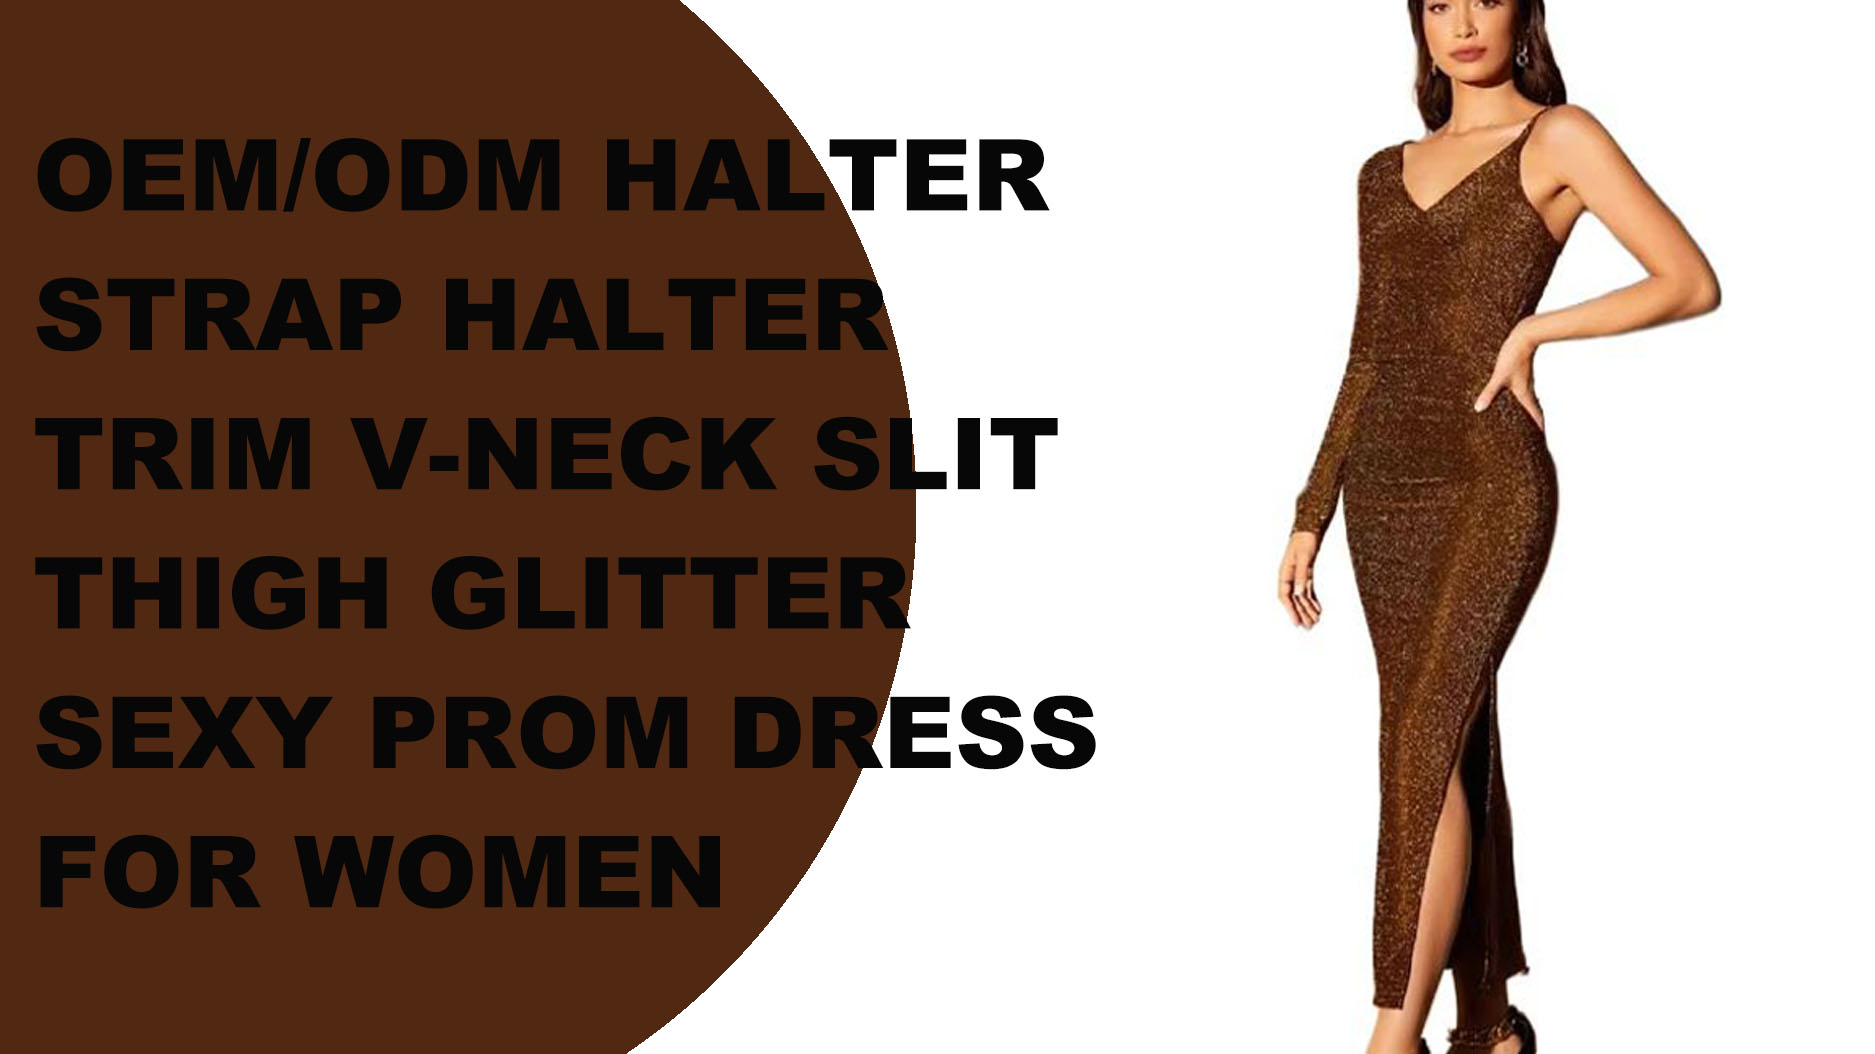 OEM/ODM Halter strap Halter Trim V-neck slit thigh glitter sexy PROM dress for women